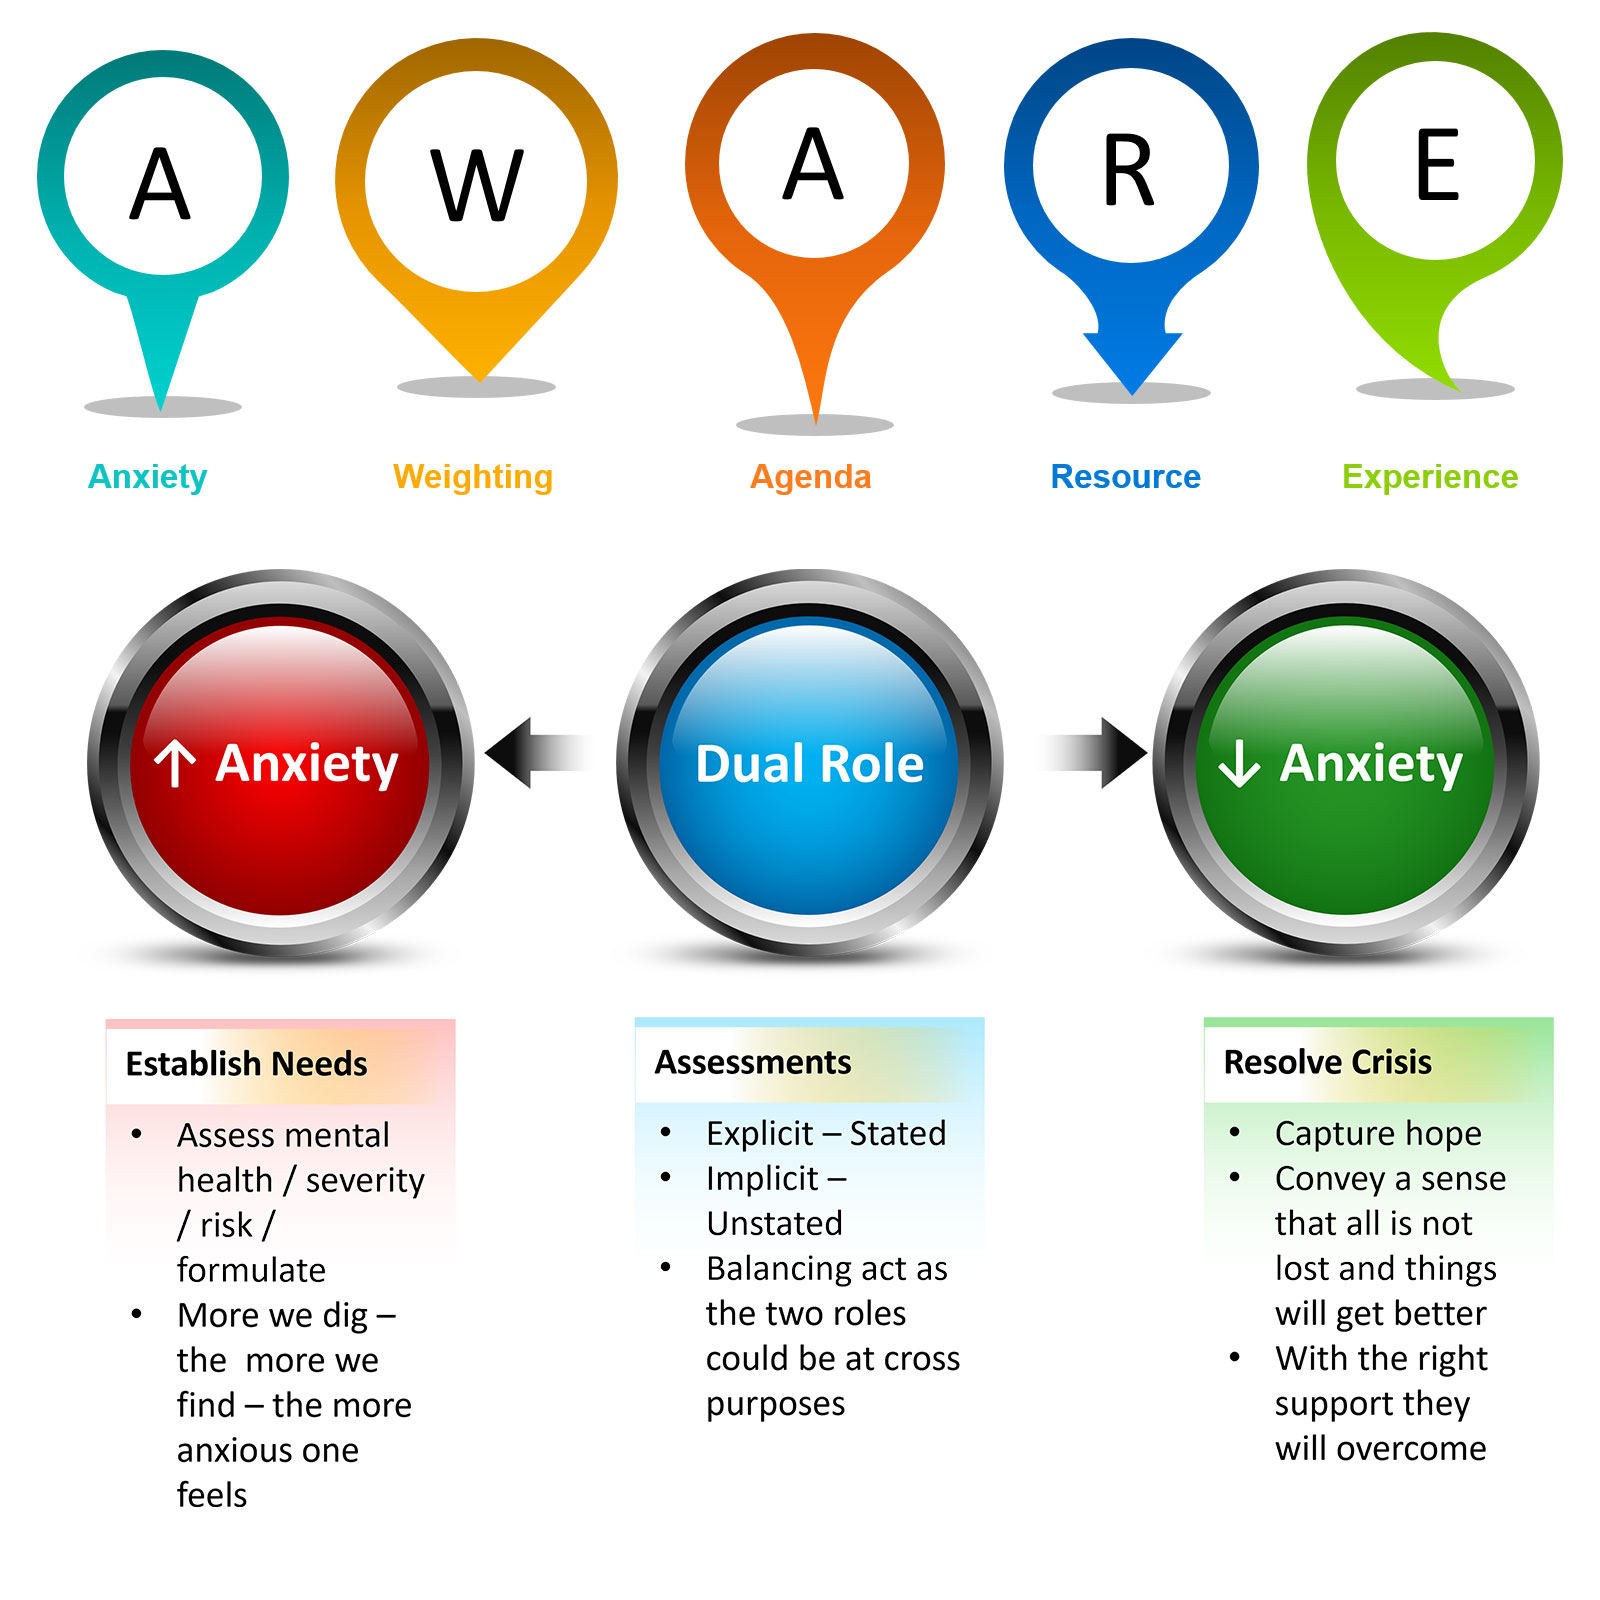 AWARE - Suicide Risk Awareness Framework